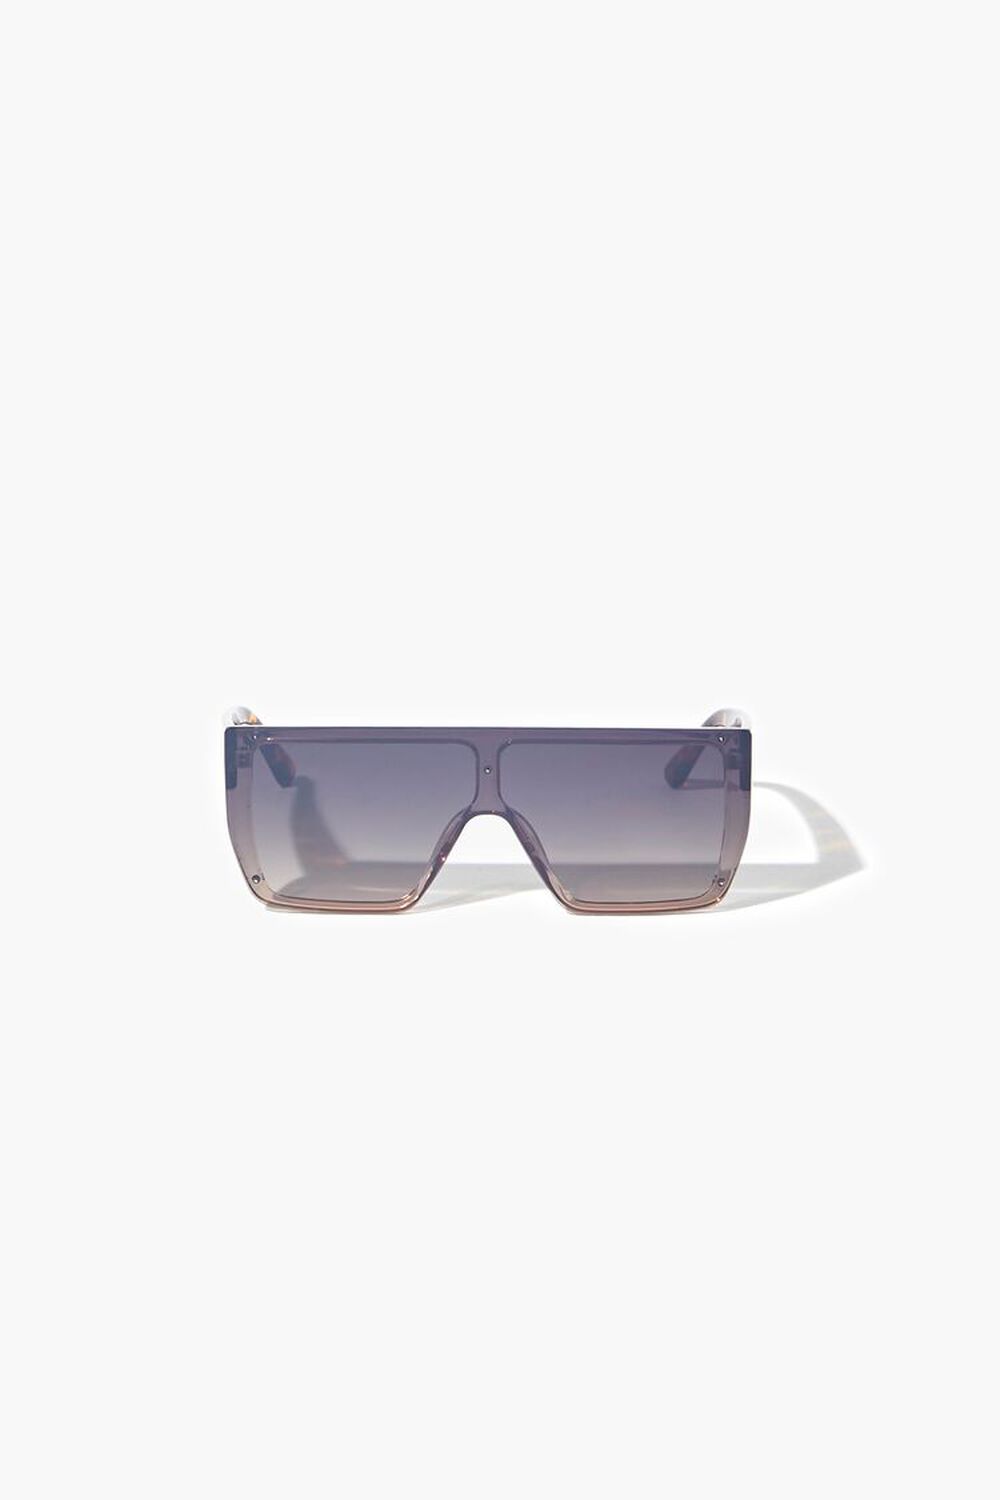 BROWN/MULTI Flat-Lens Square Sunglasses, image 1